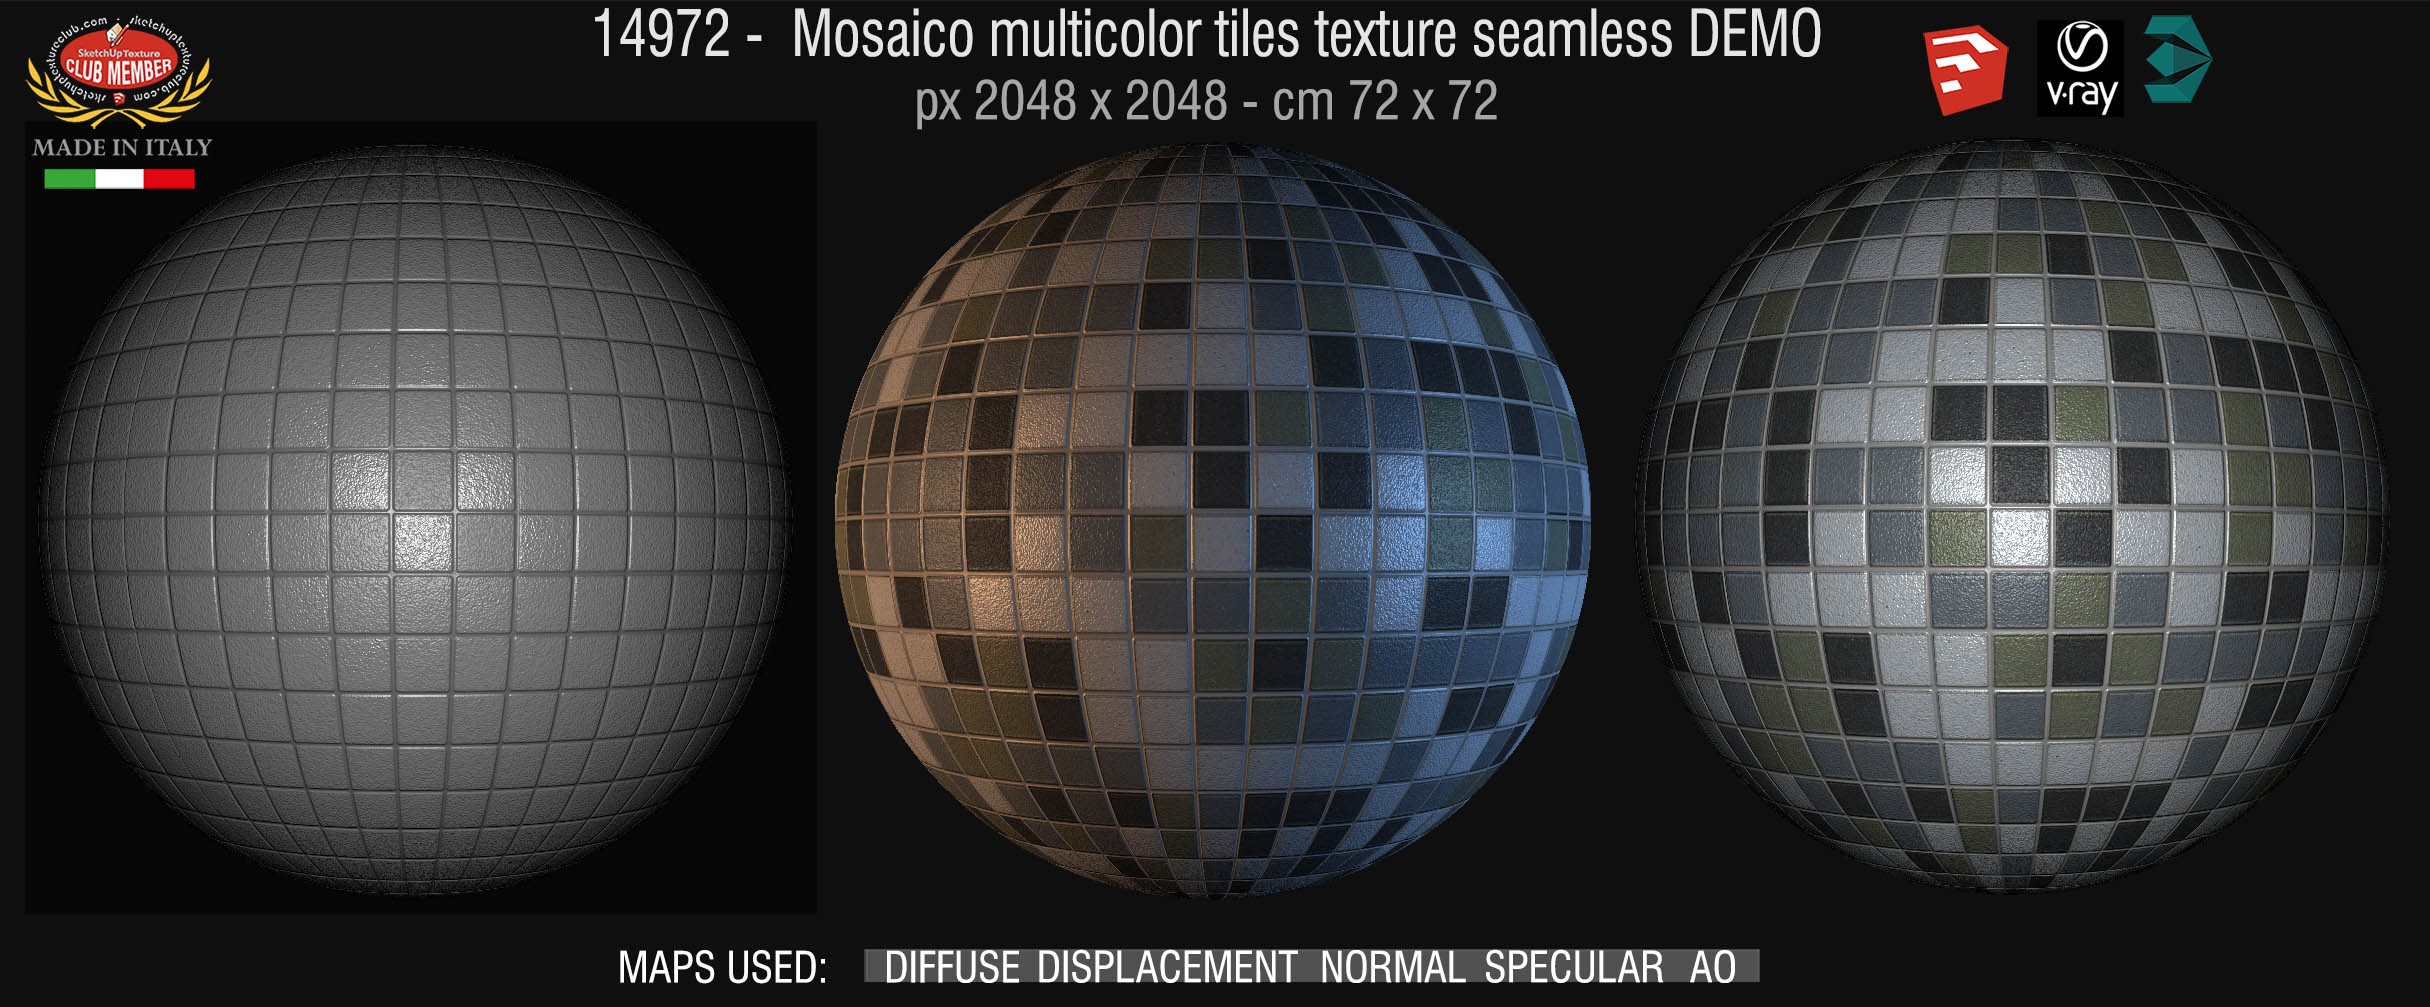 14972 Mosaico multicolor tiles texture seamless + maps DEMO